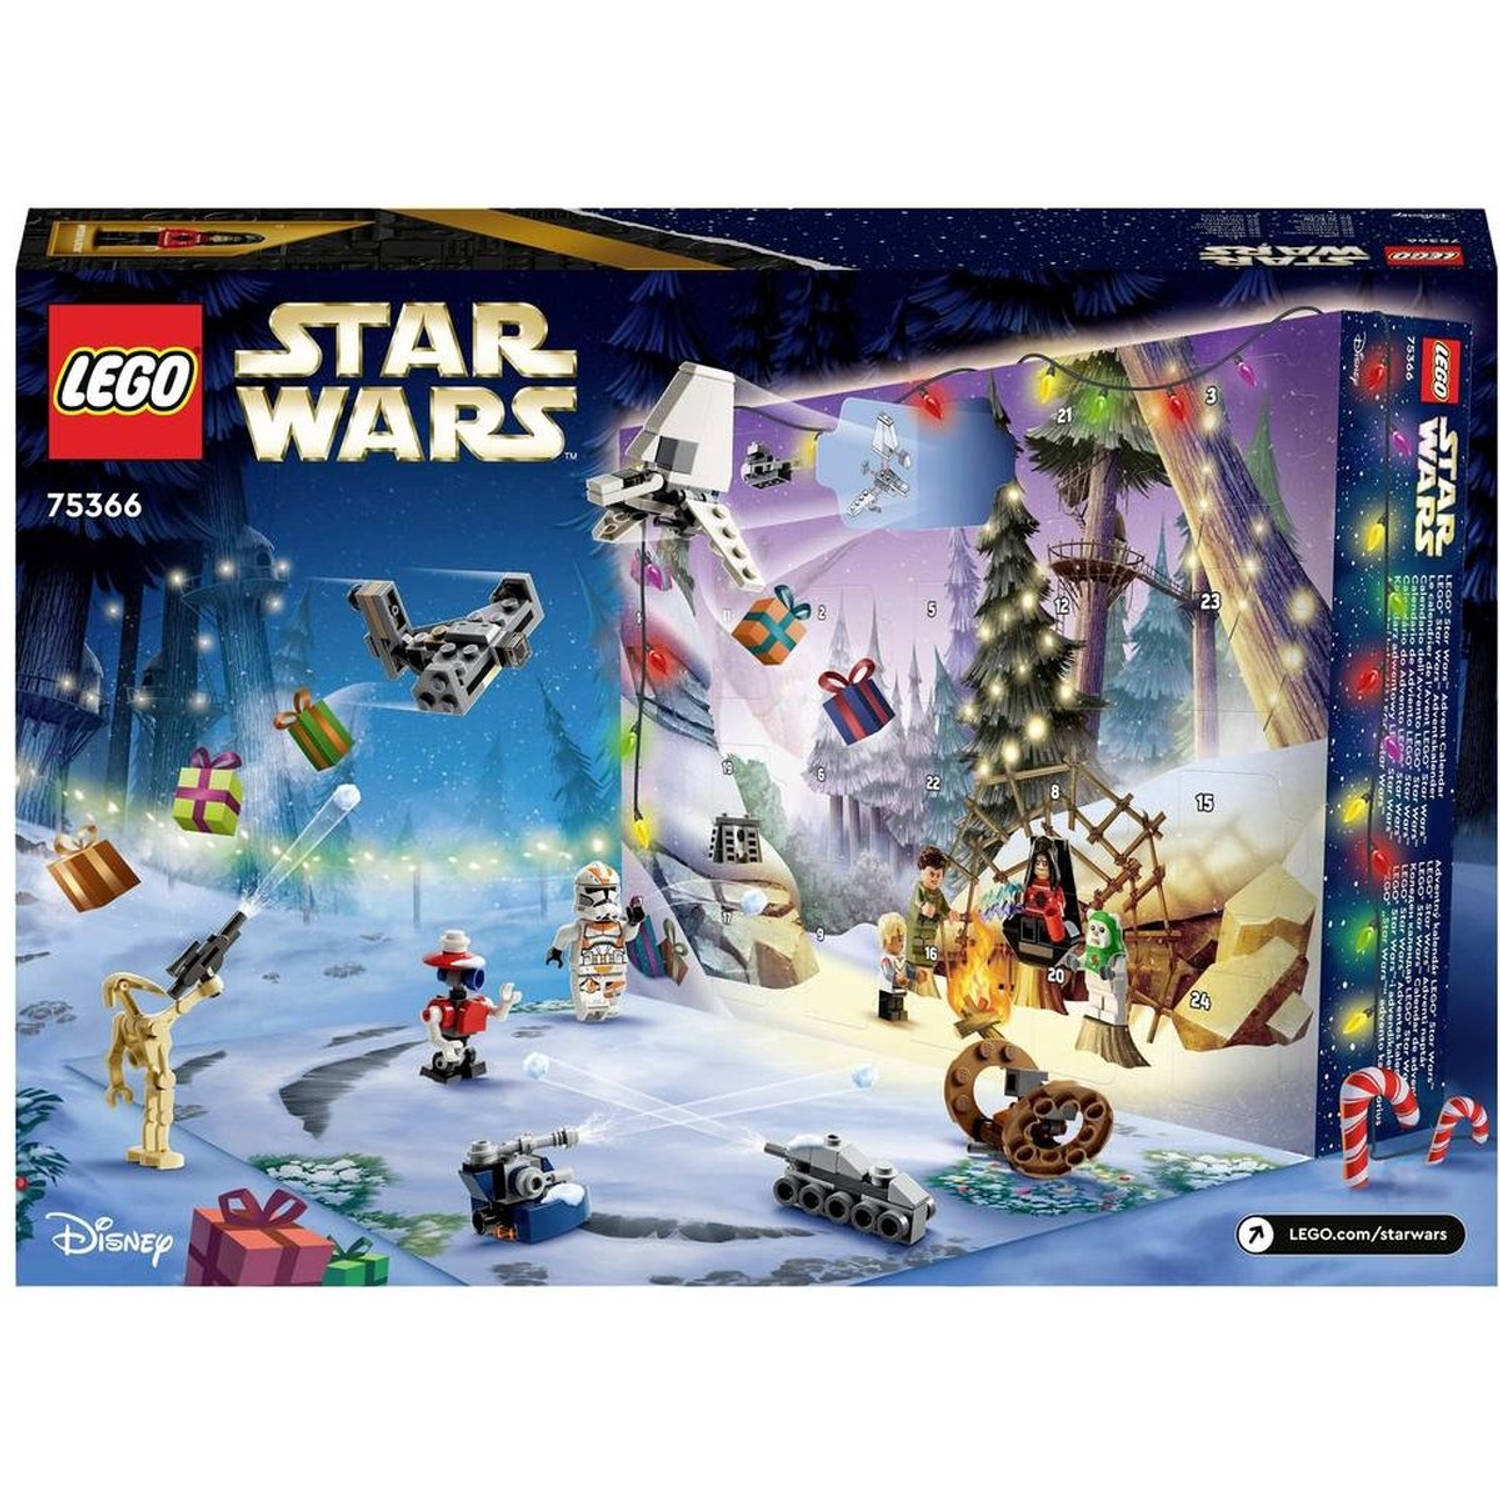 LEGOÂ® Star Wars 75366 adventskalender